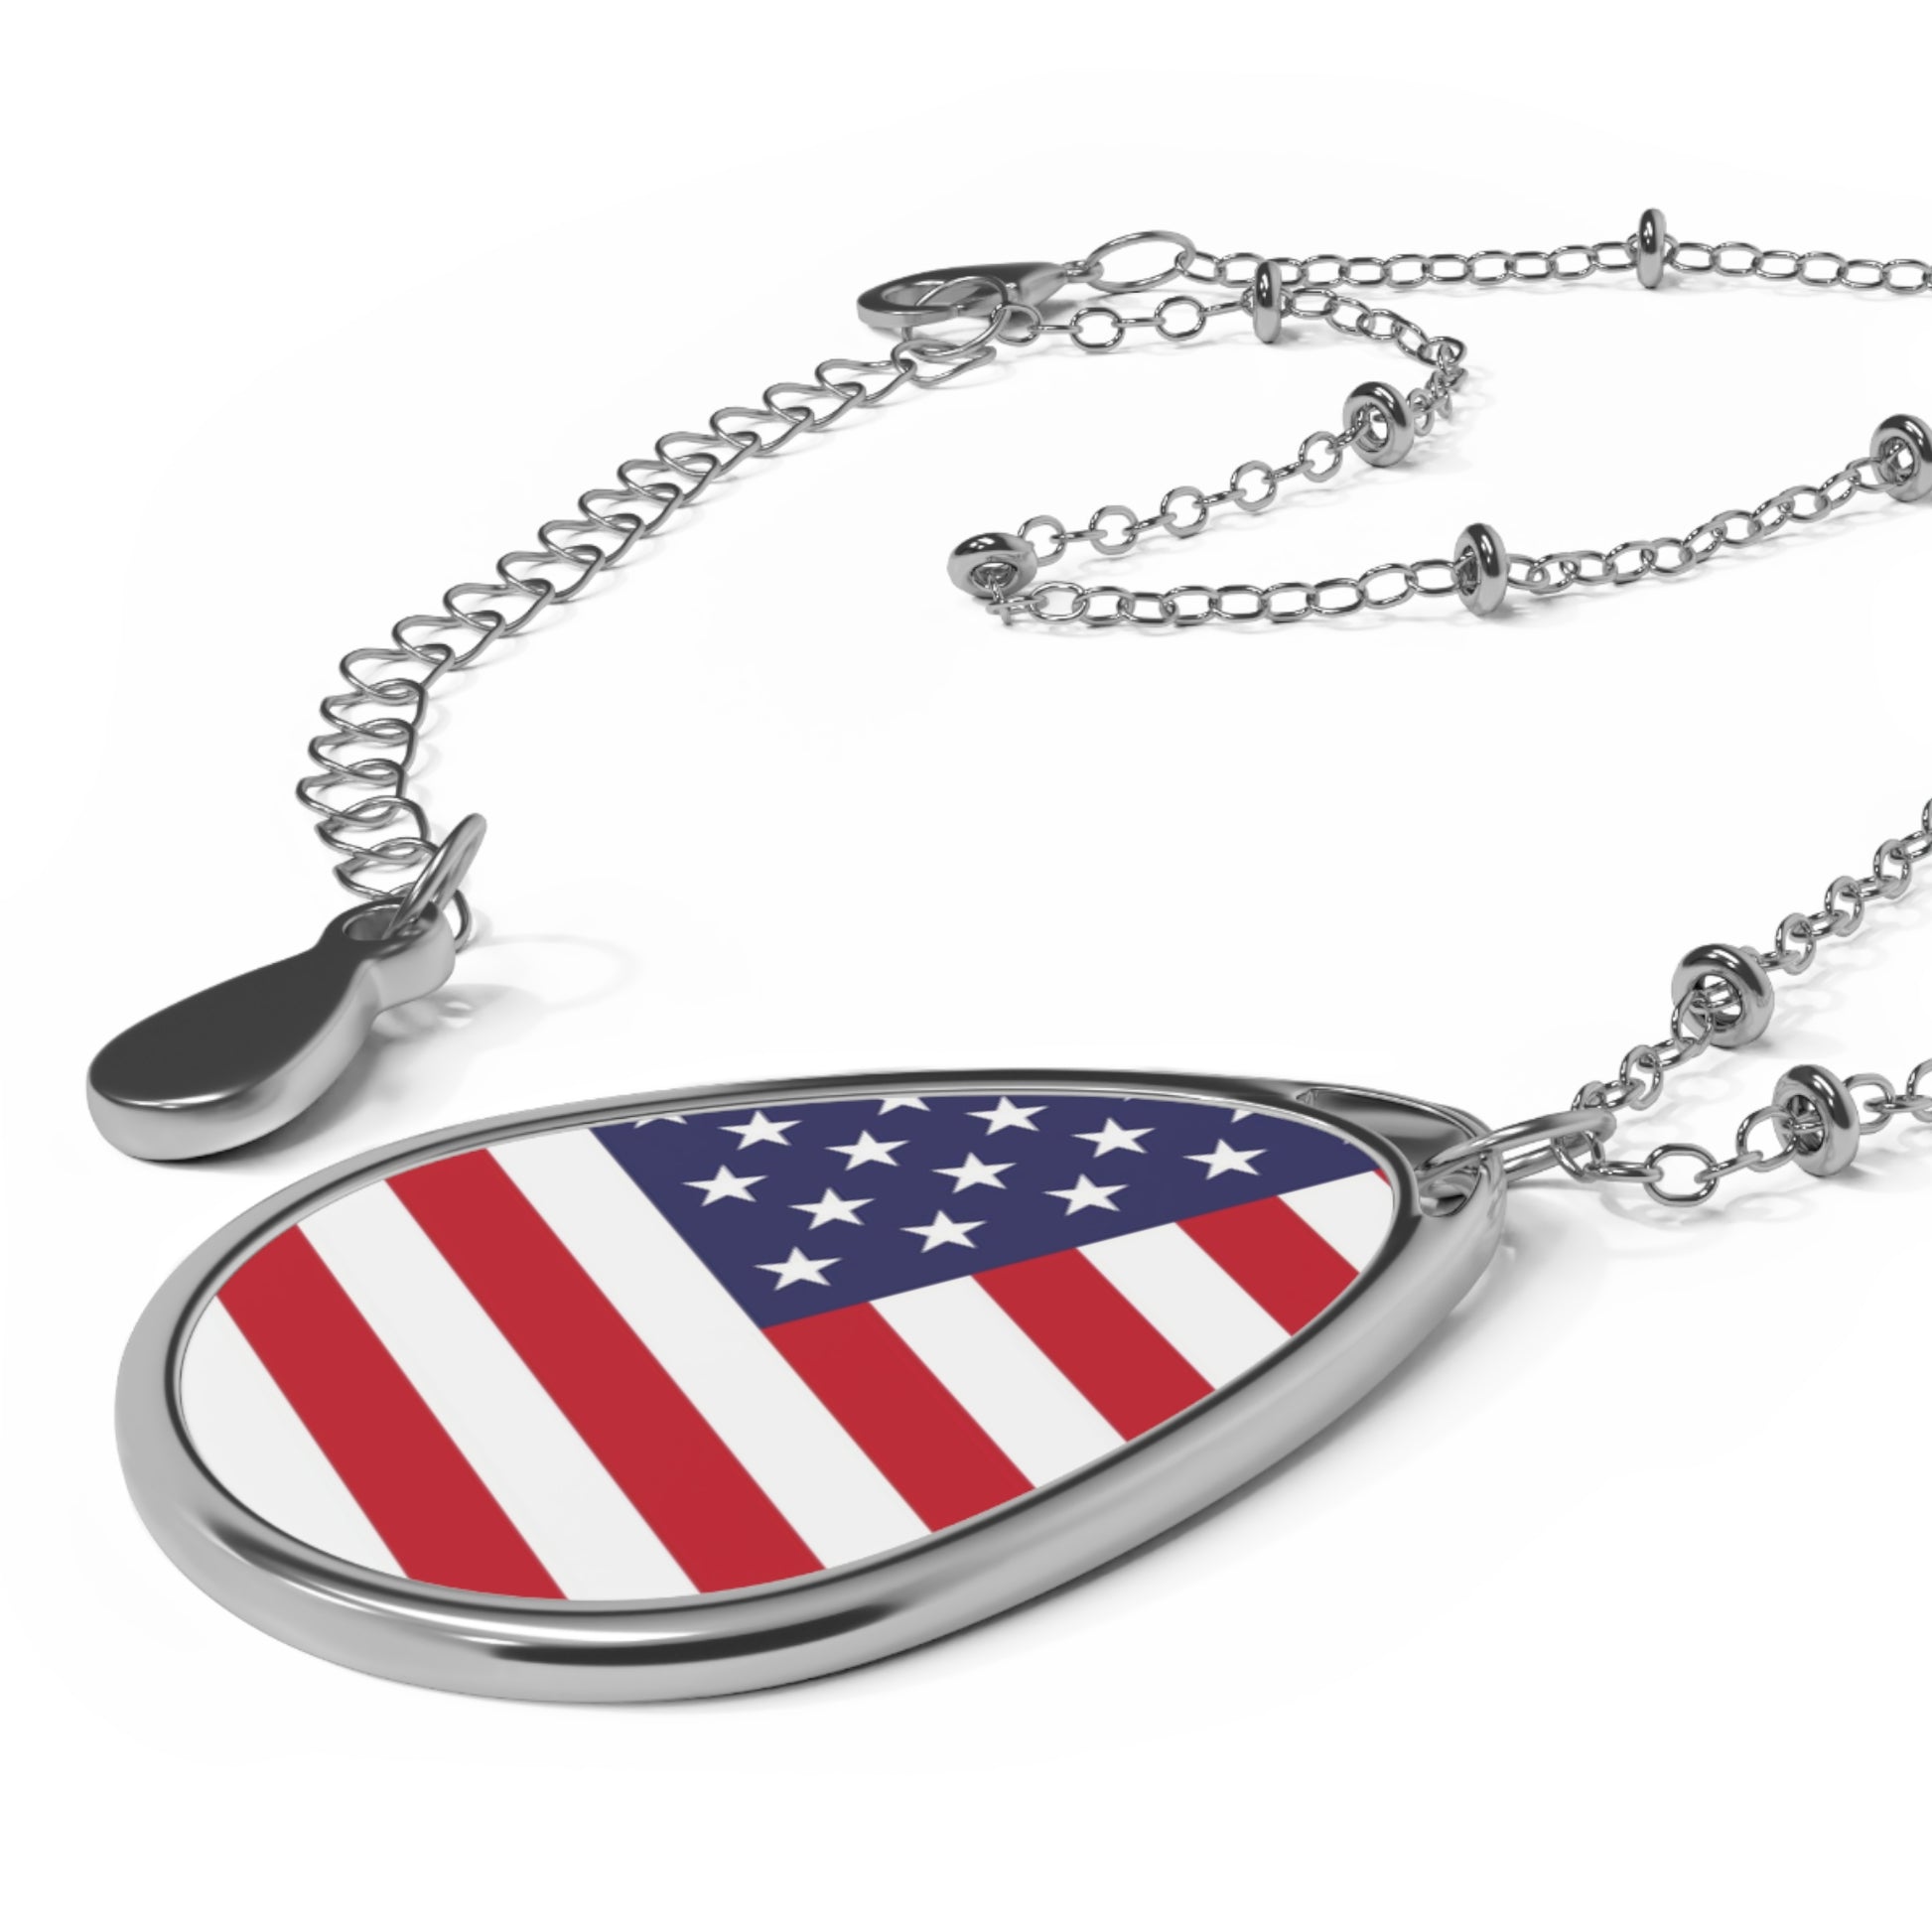 USA Necklace